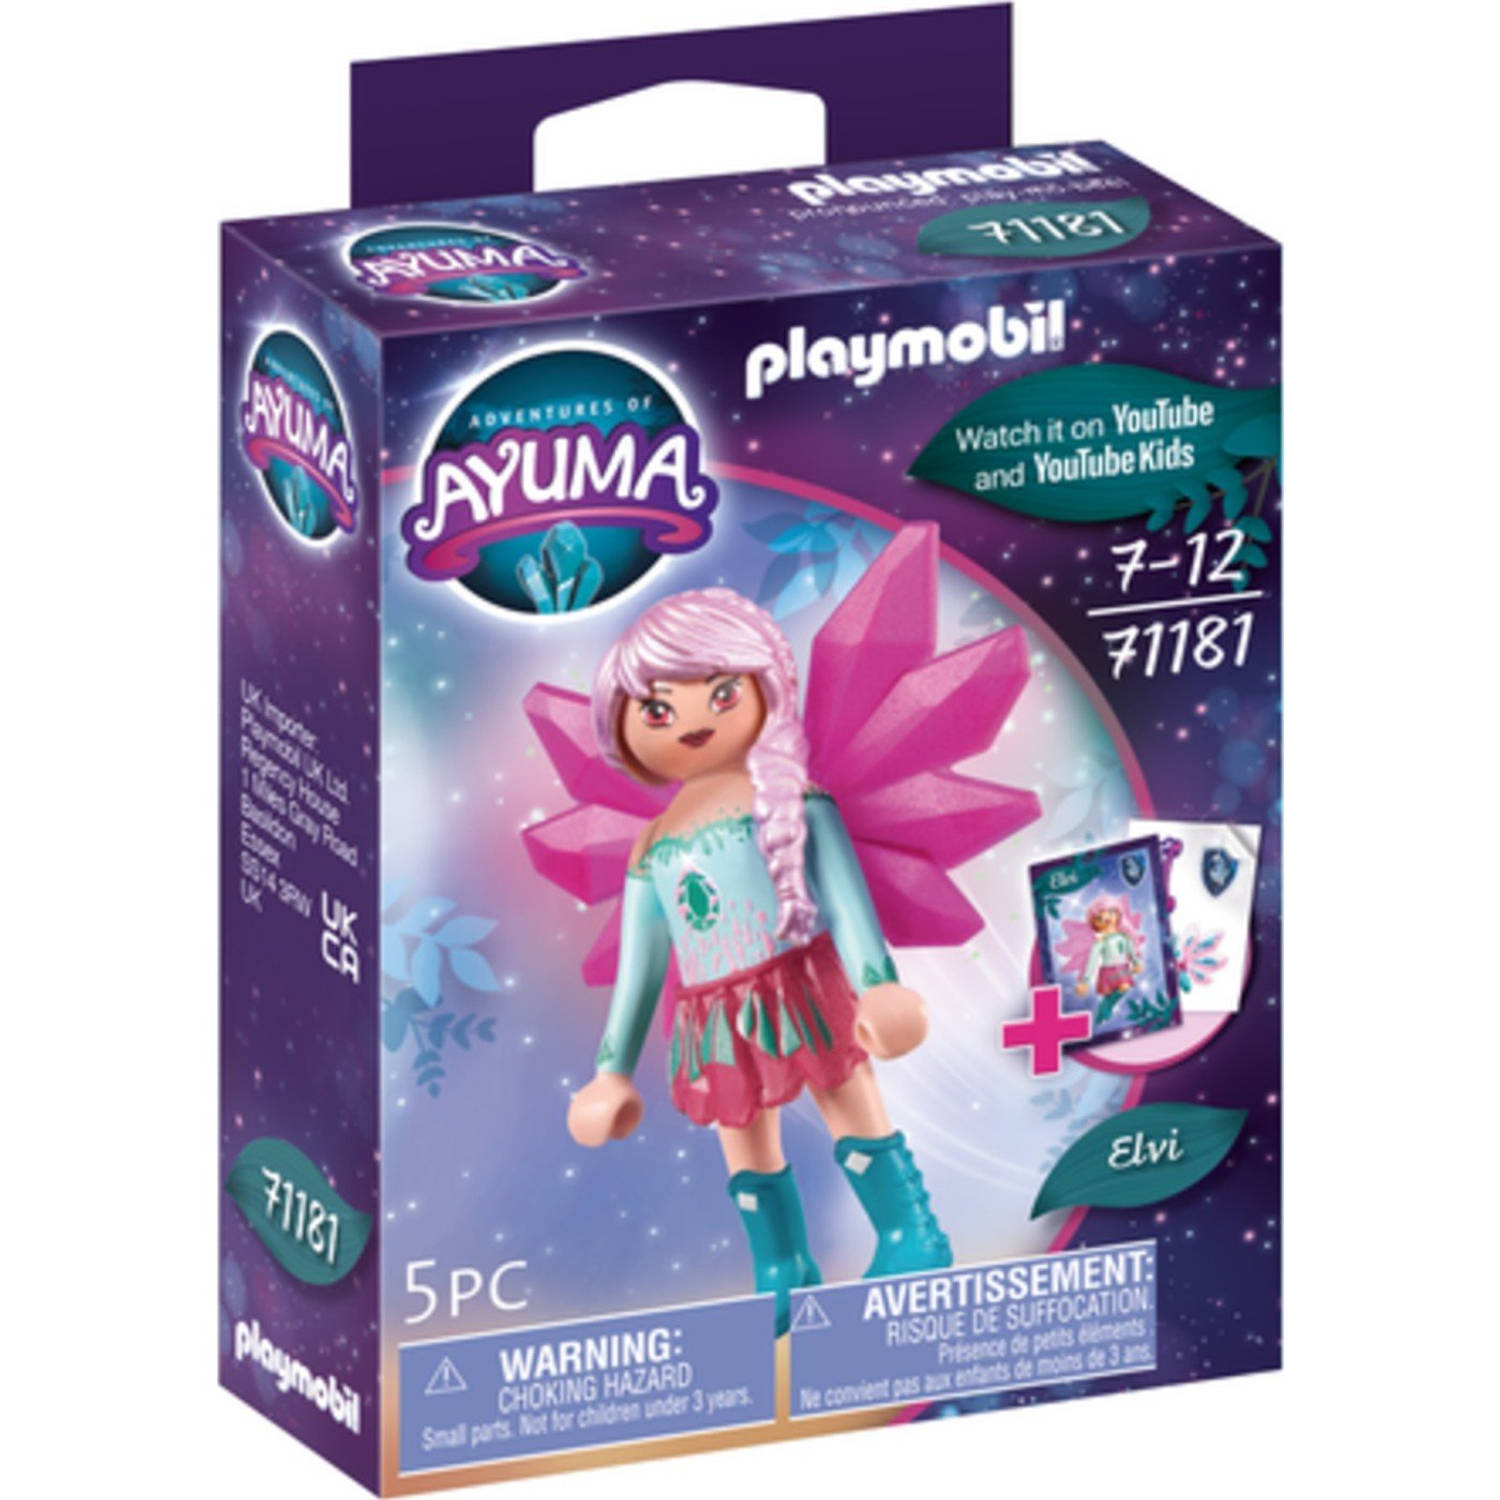 Playmobil Adventures of Ayuma Crystal Fairy Elvi 71181